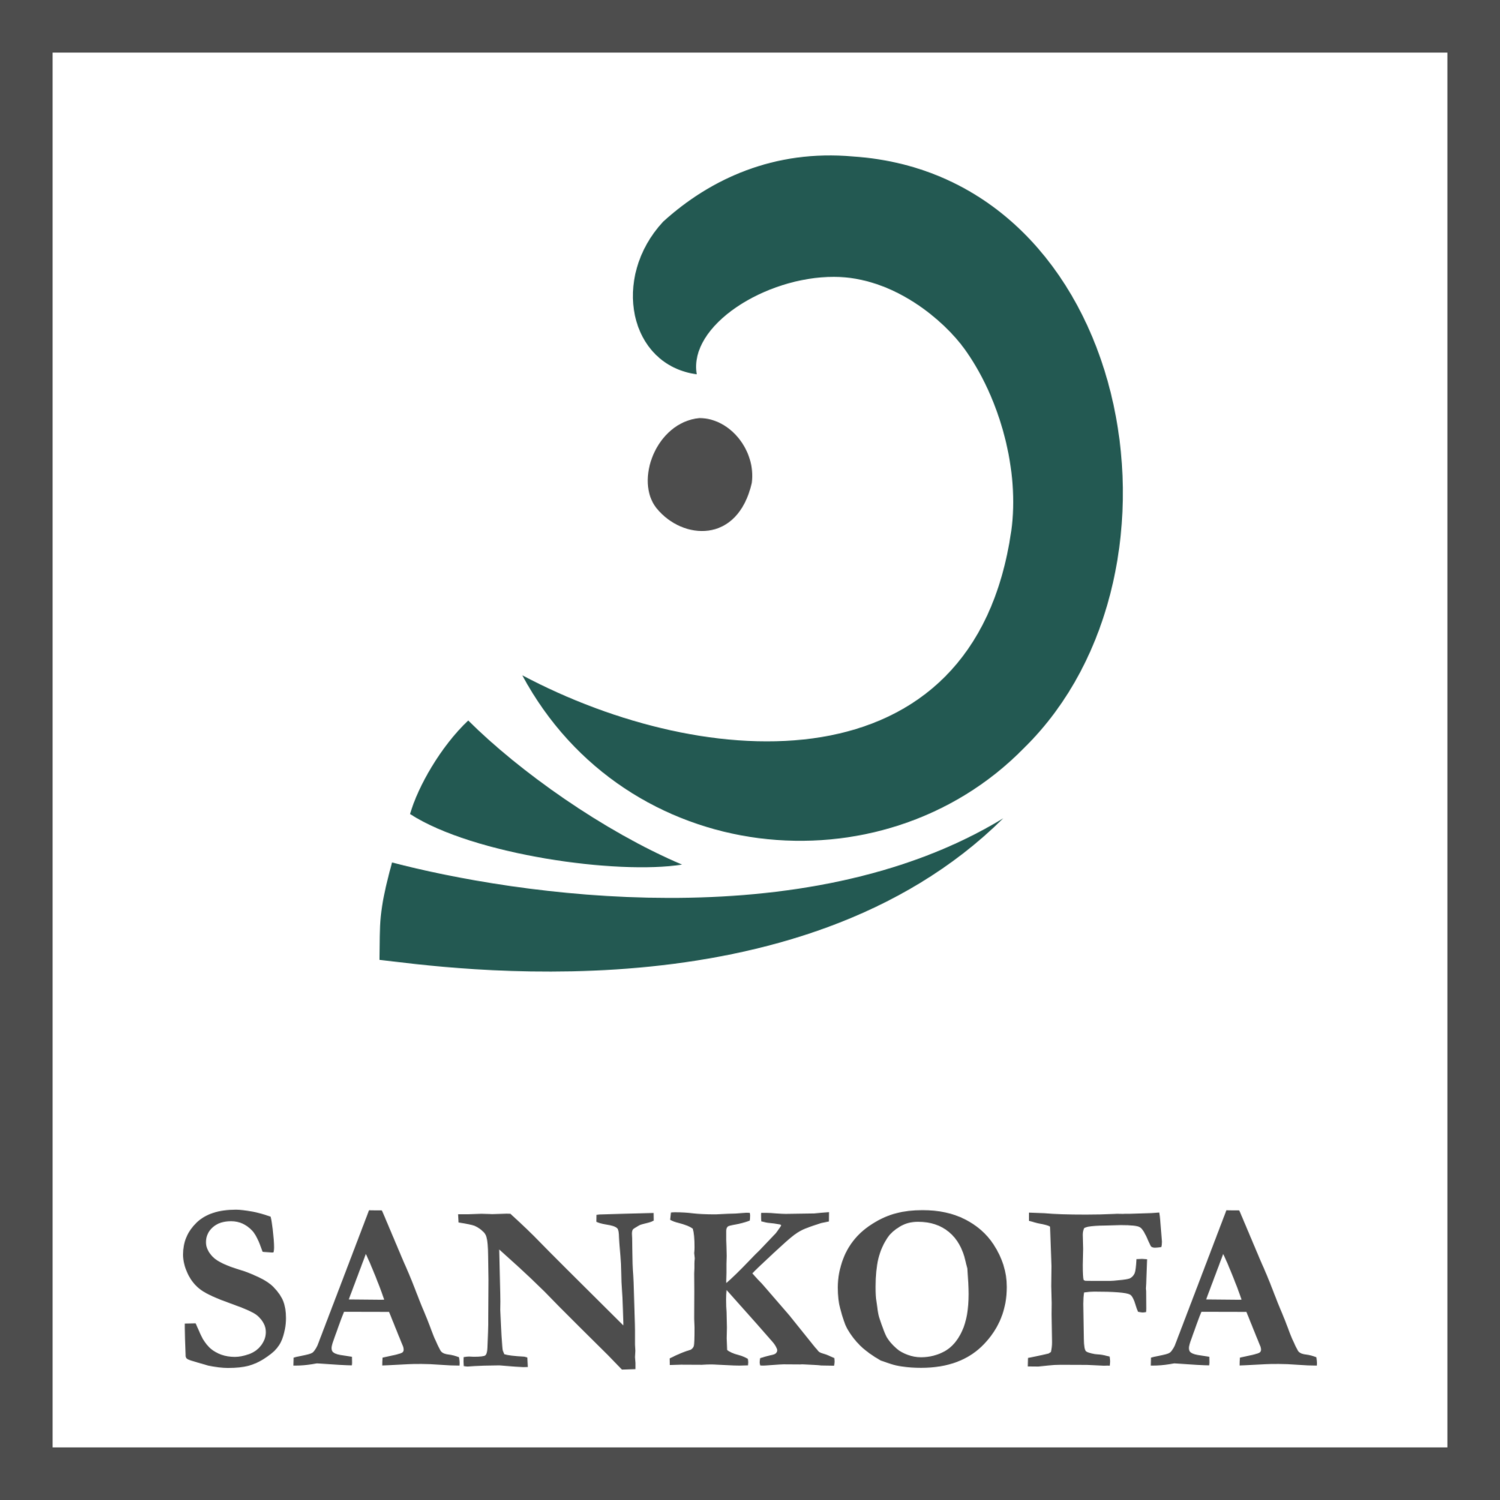 The Sankofa Group